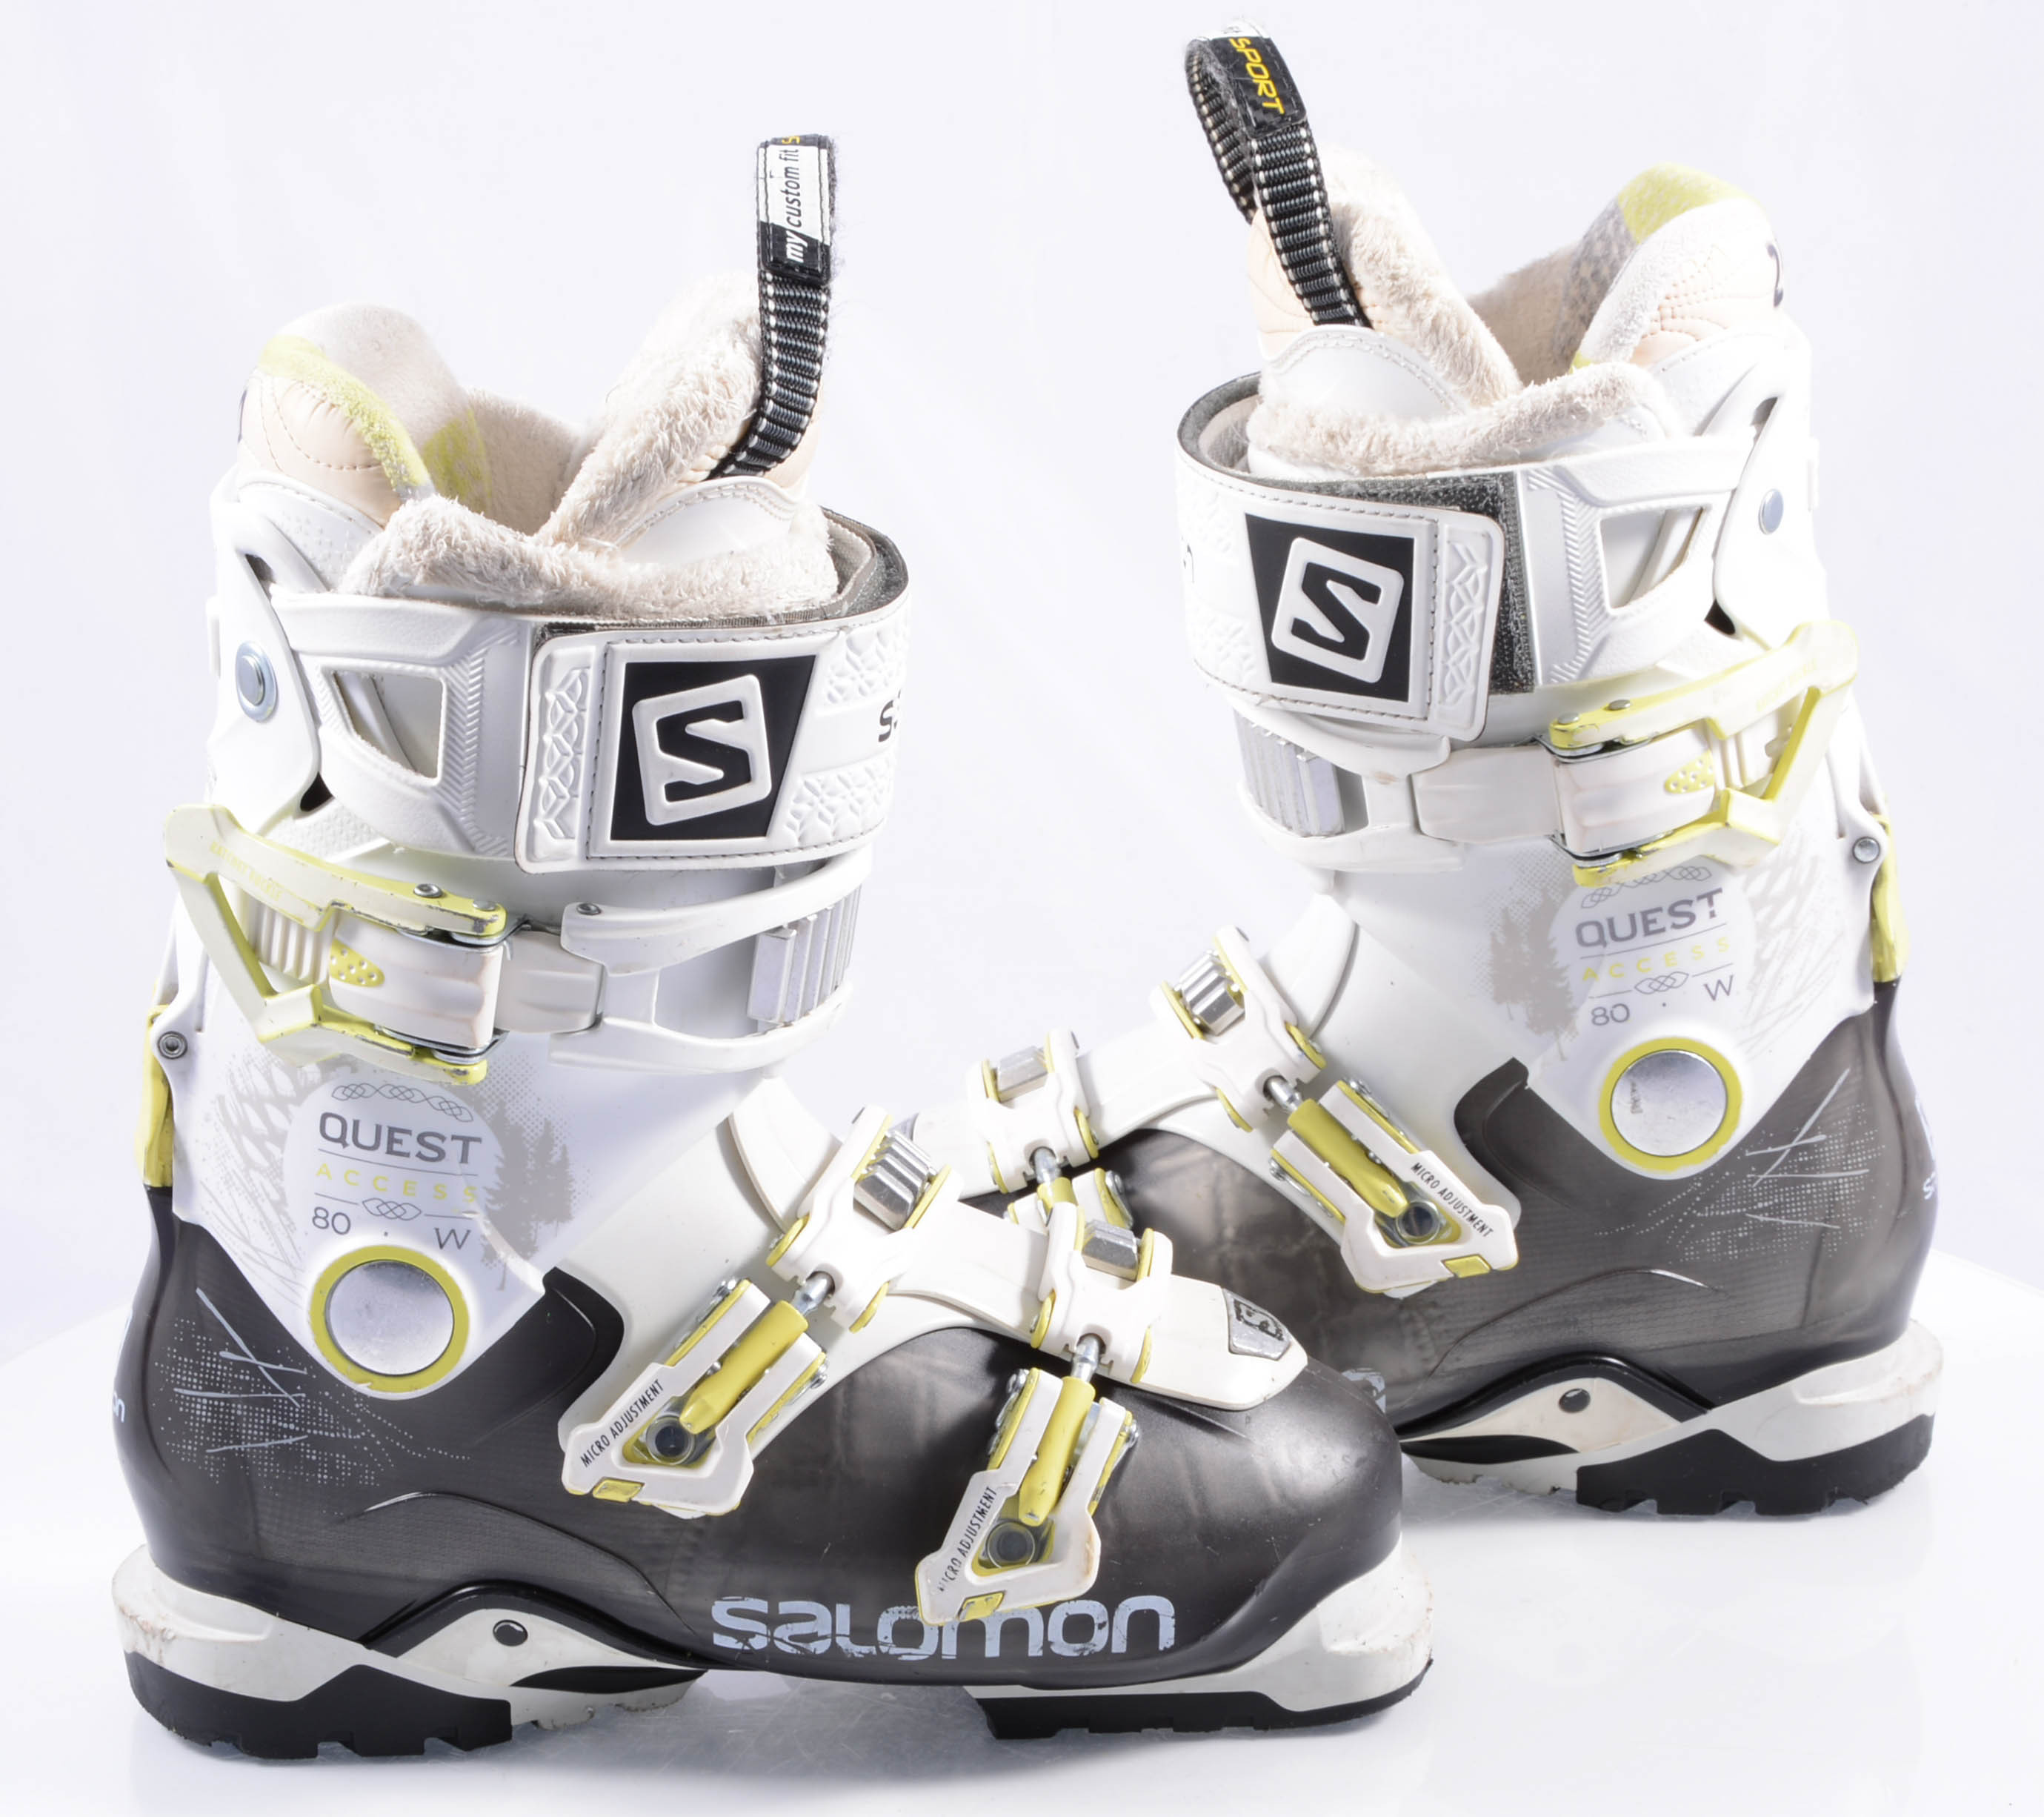 Gooi bijvoeglijk naamwoord Smelten women's ski boots SALOMON QUEST ACCESS 80 W, SKI/WALK, magnesium backbone,  micro, grey/white/yellow ( TOP condition ) - Mardosport.com